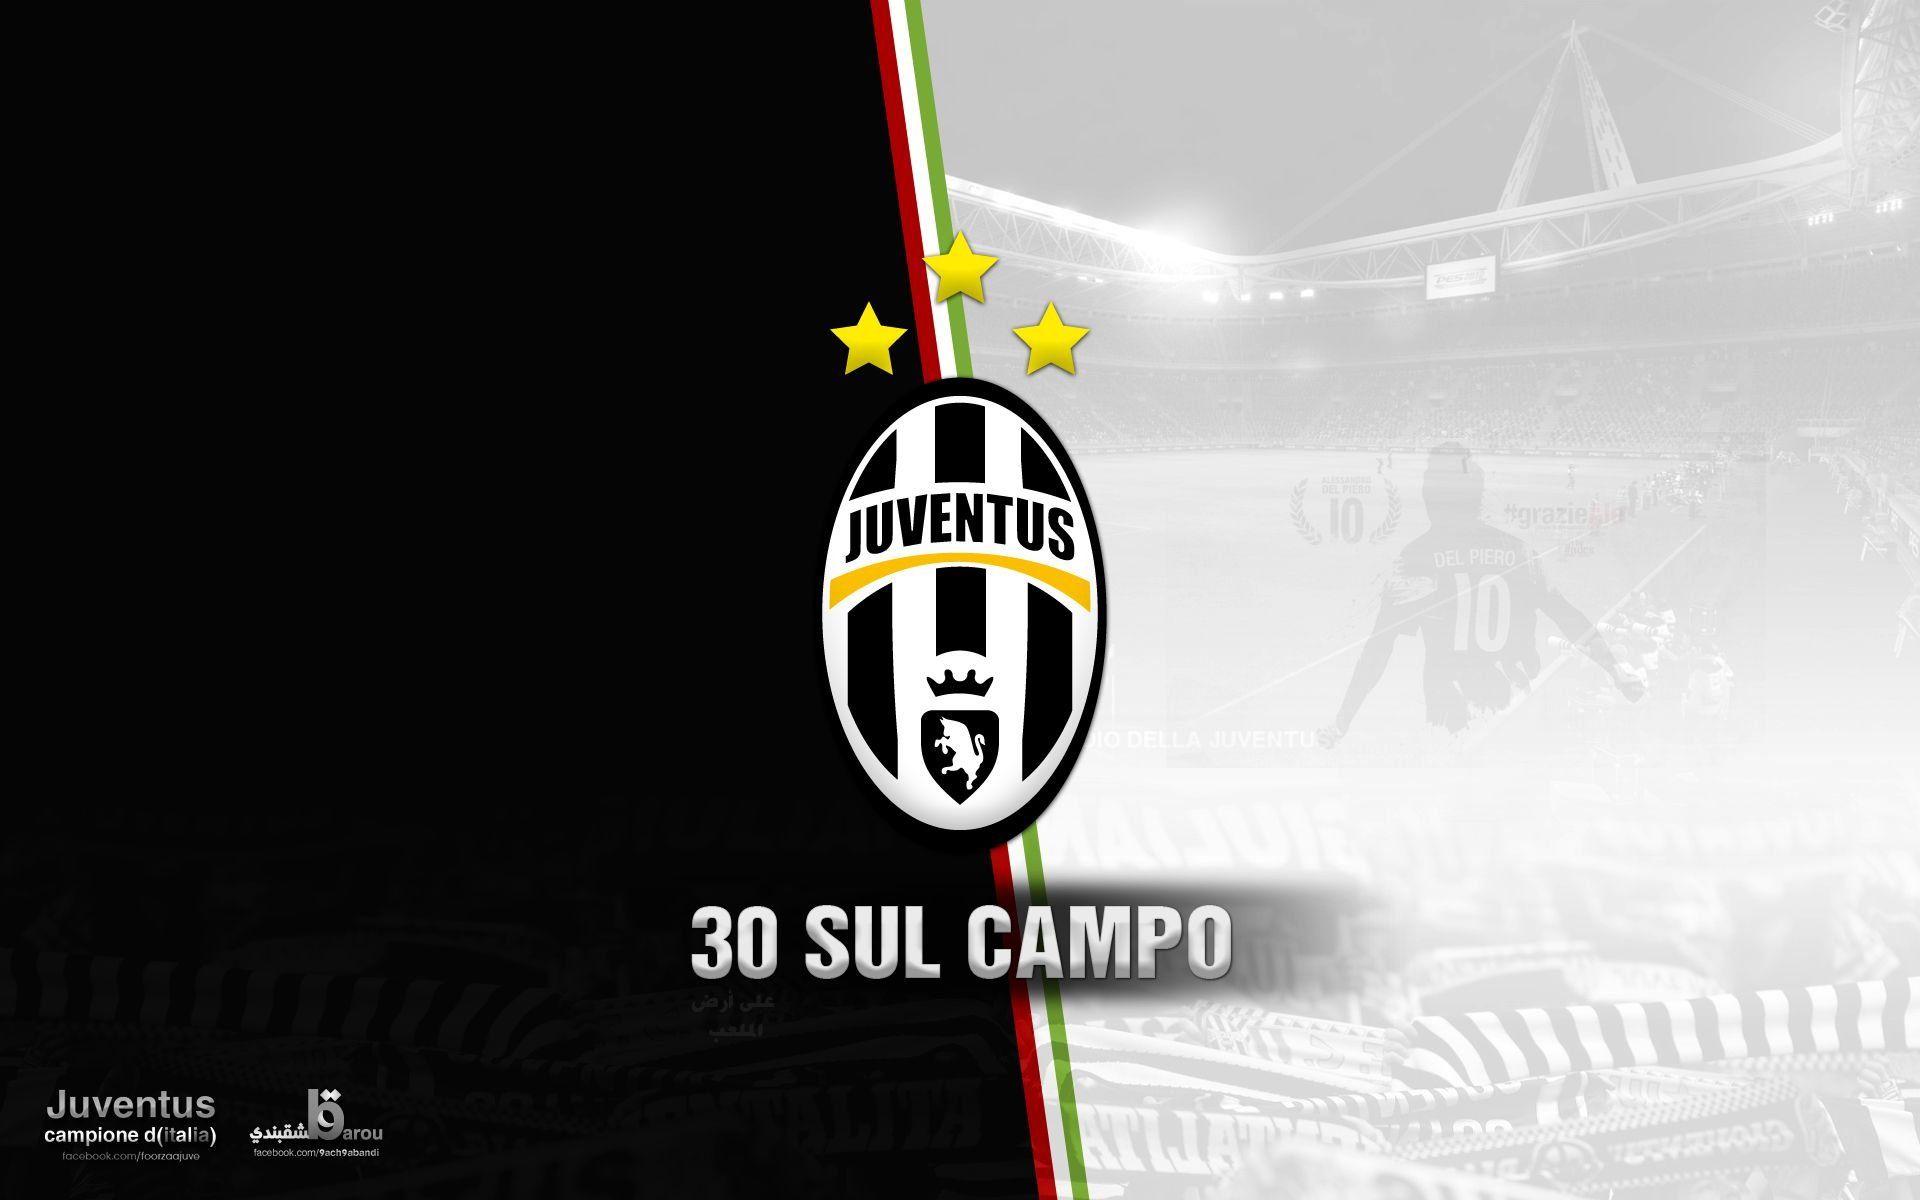 Logo Juventus Wallpapers 2016 Wallpaper Cave